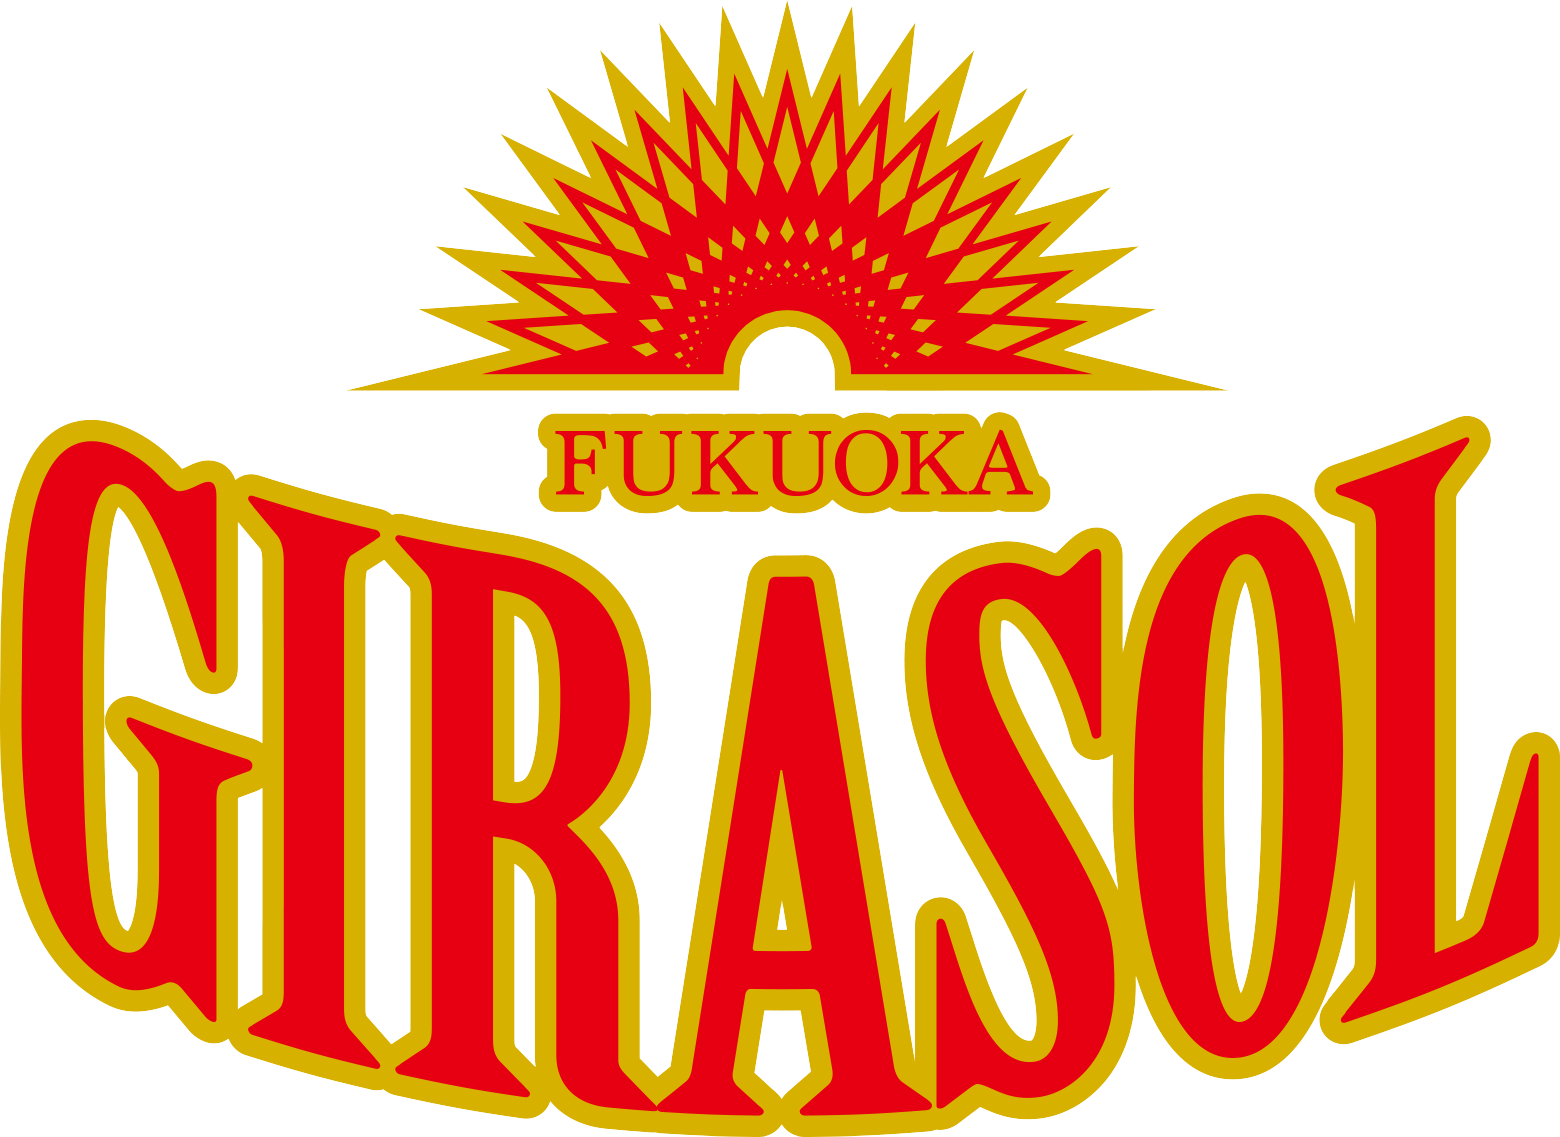 girasol_logo